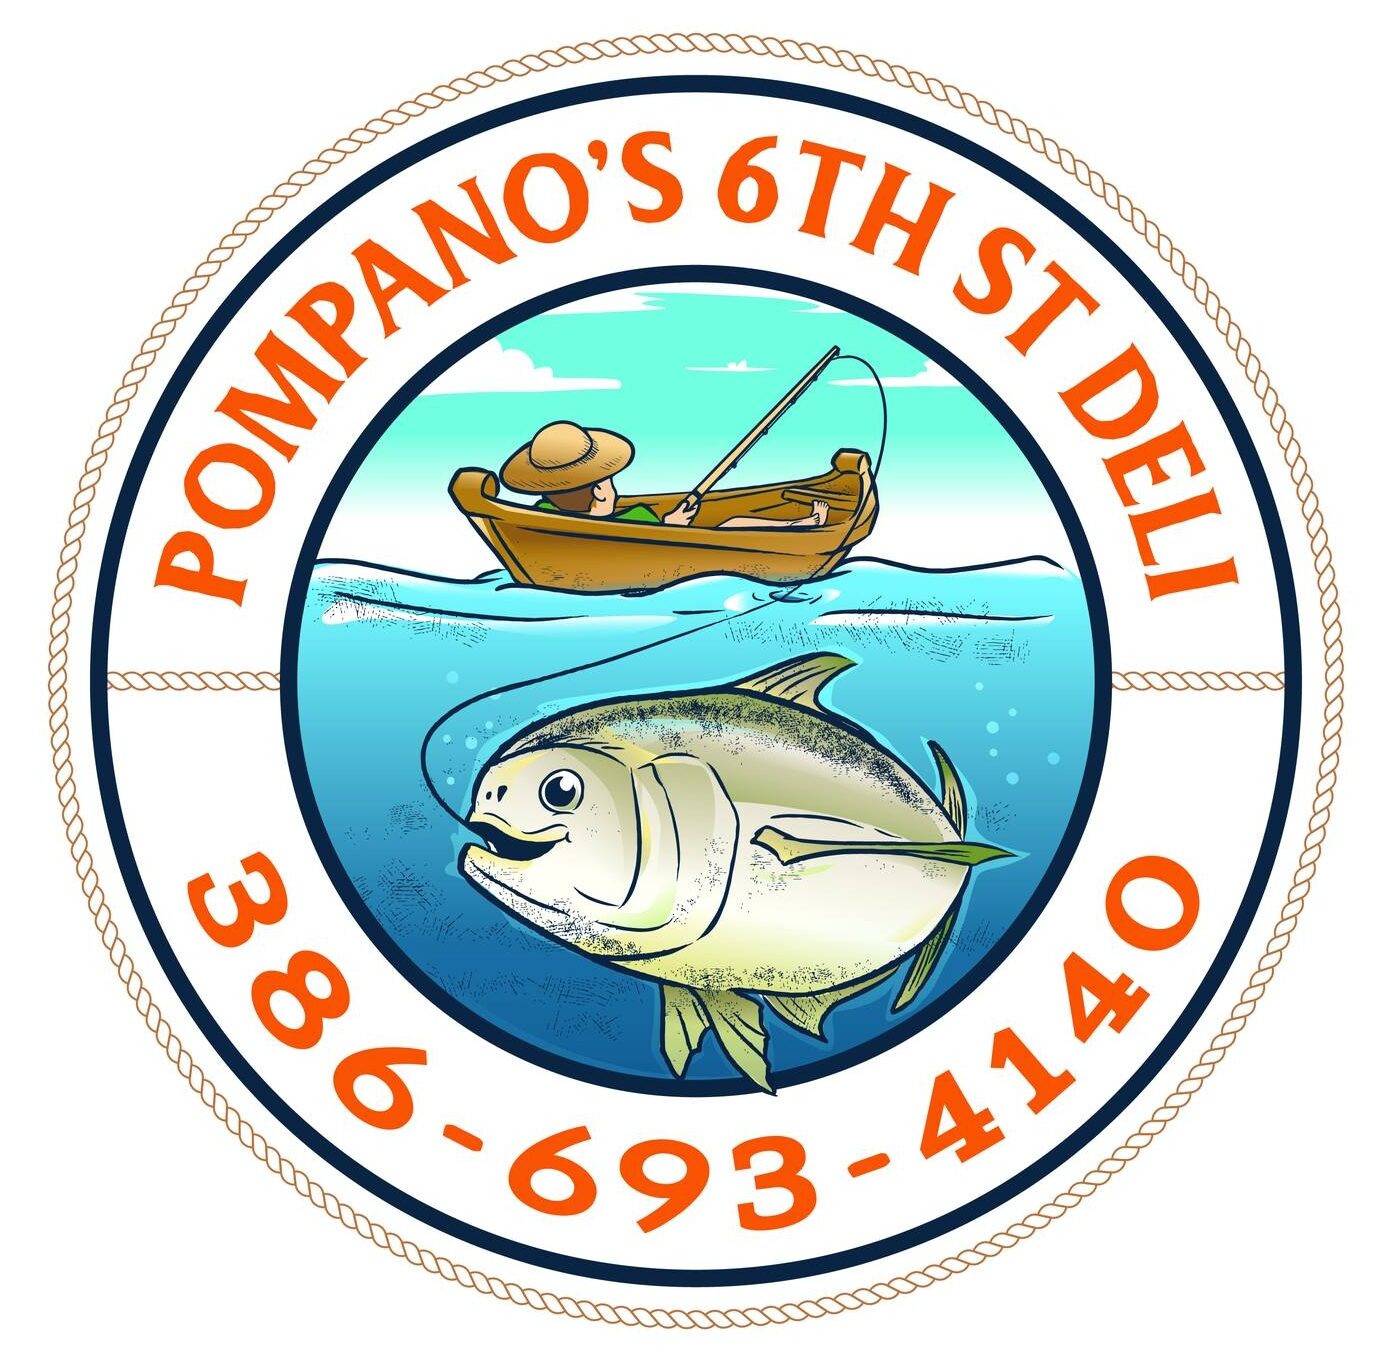 pompanos's 6th street deli logo